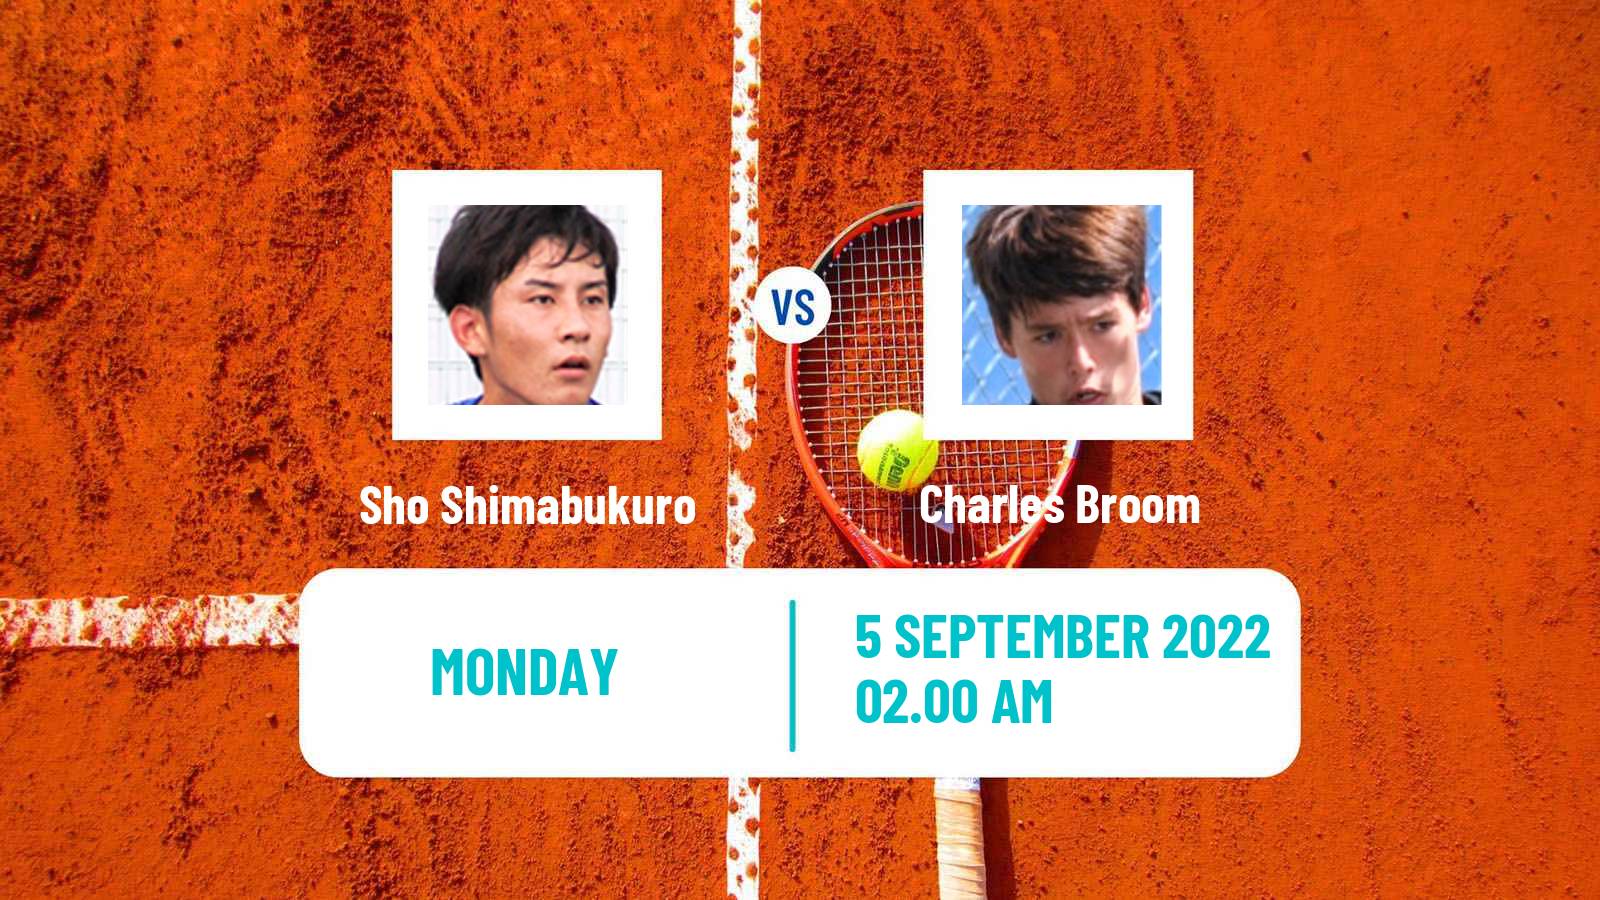 Tennis ATP Challenger Sho Shimabukuro - Charles Broom